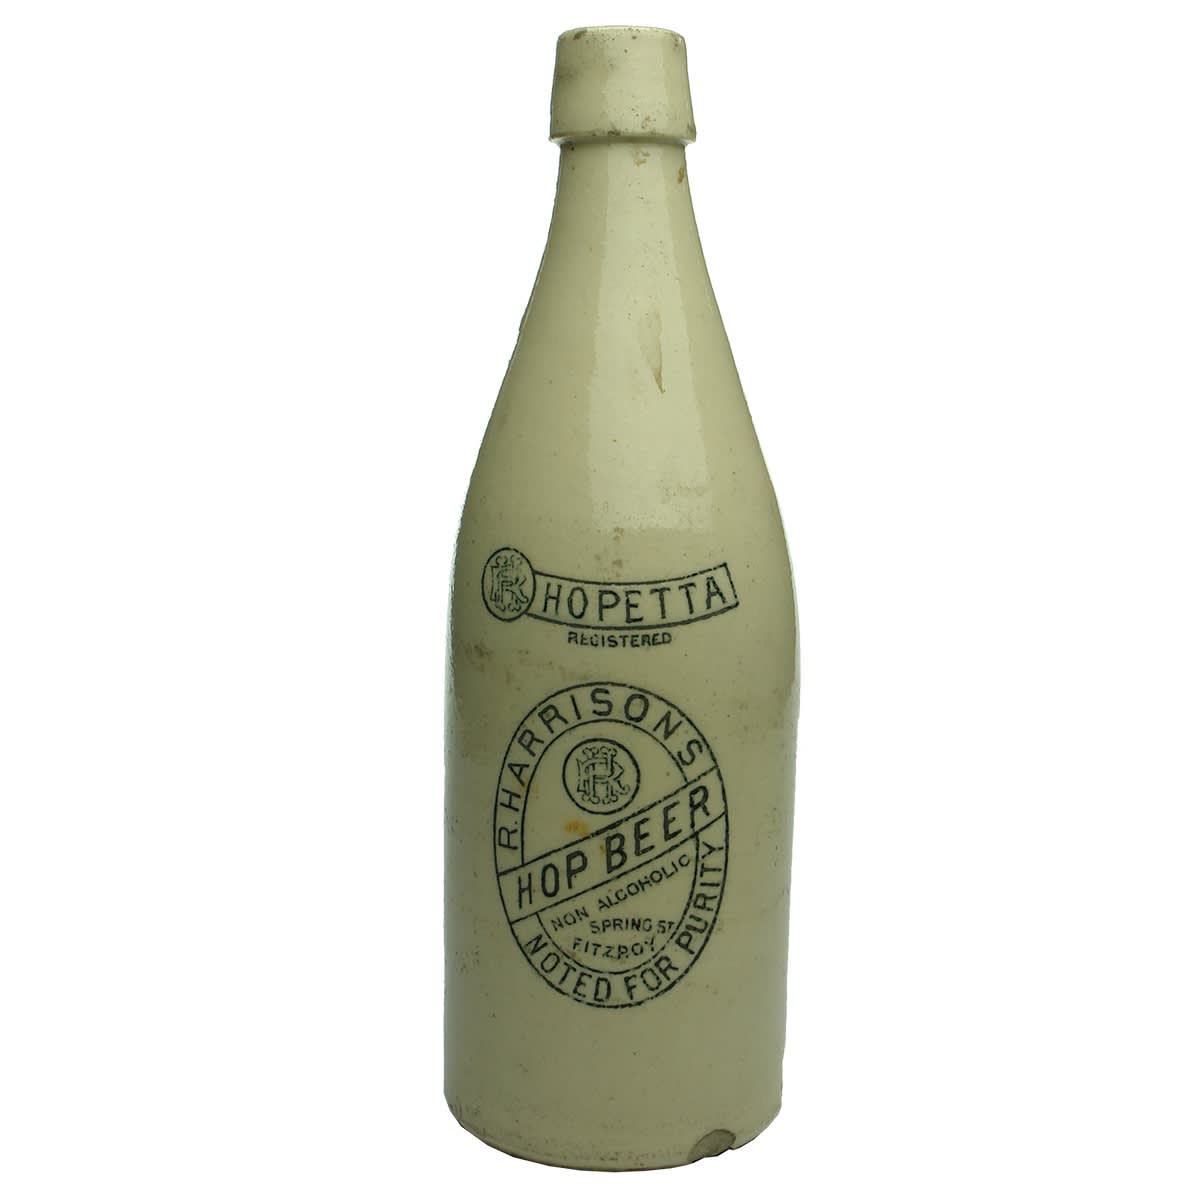 Ginger Beer. R. Harrison, Fitzroy. Hopetta. All White. 26 oz. (Victoria)